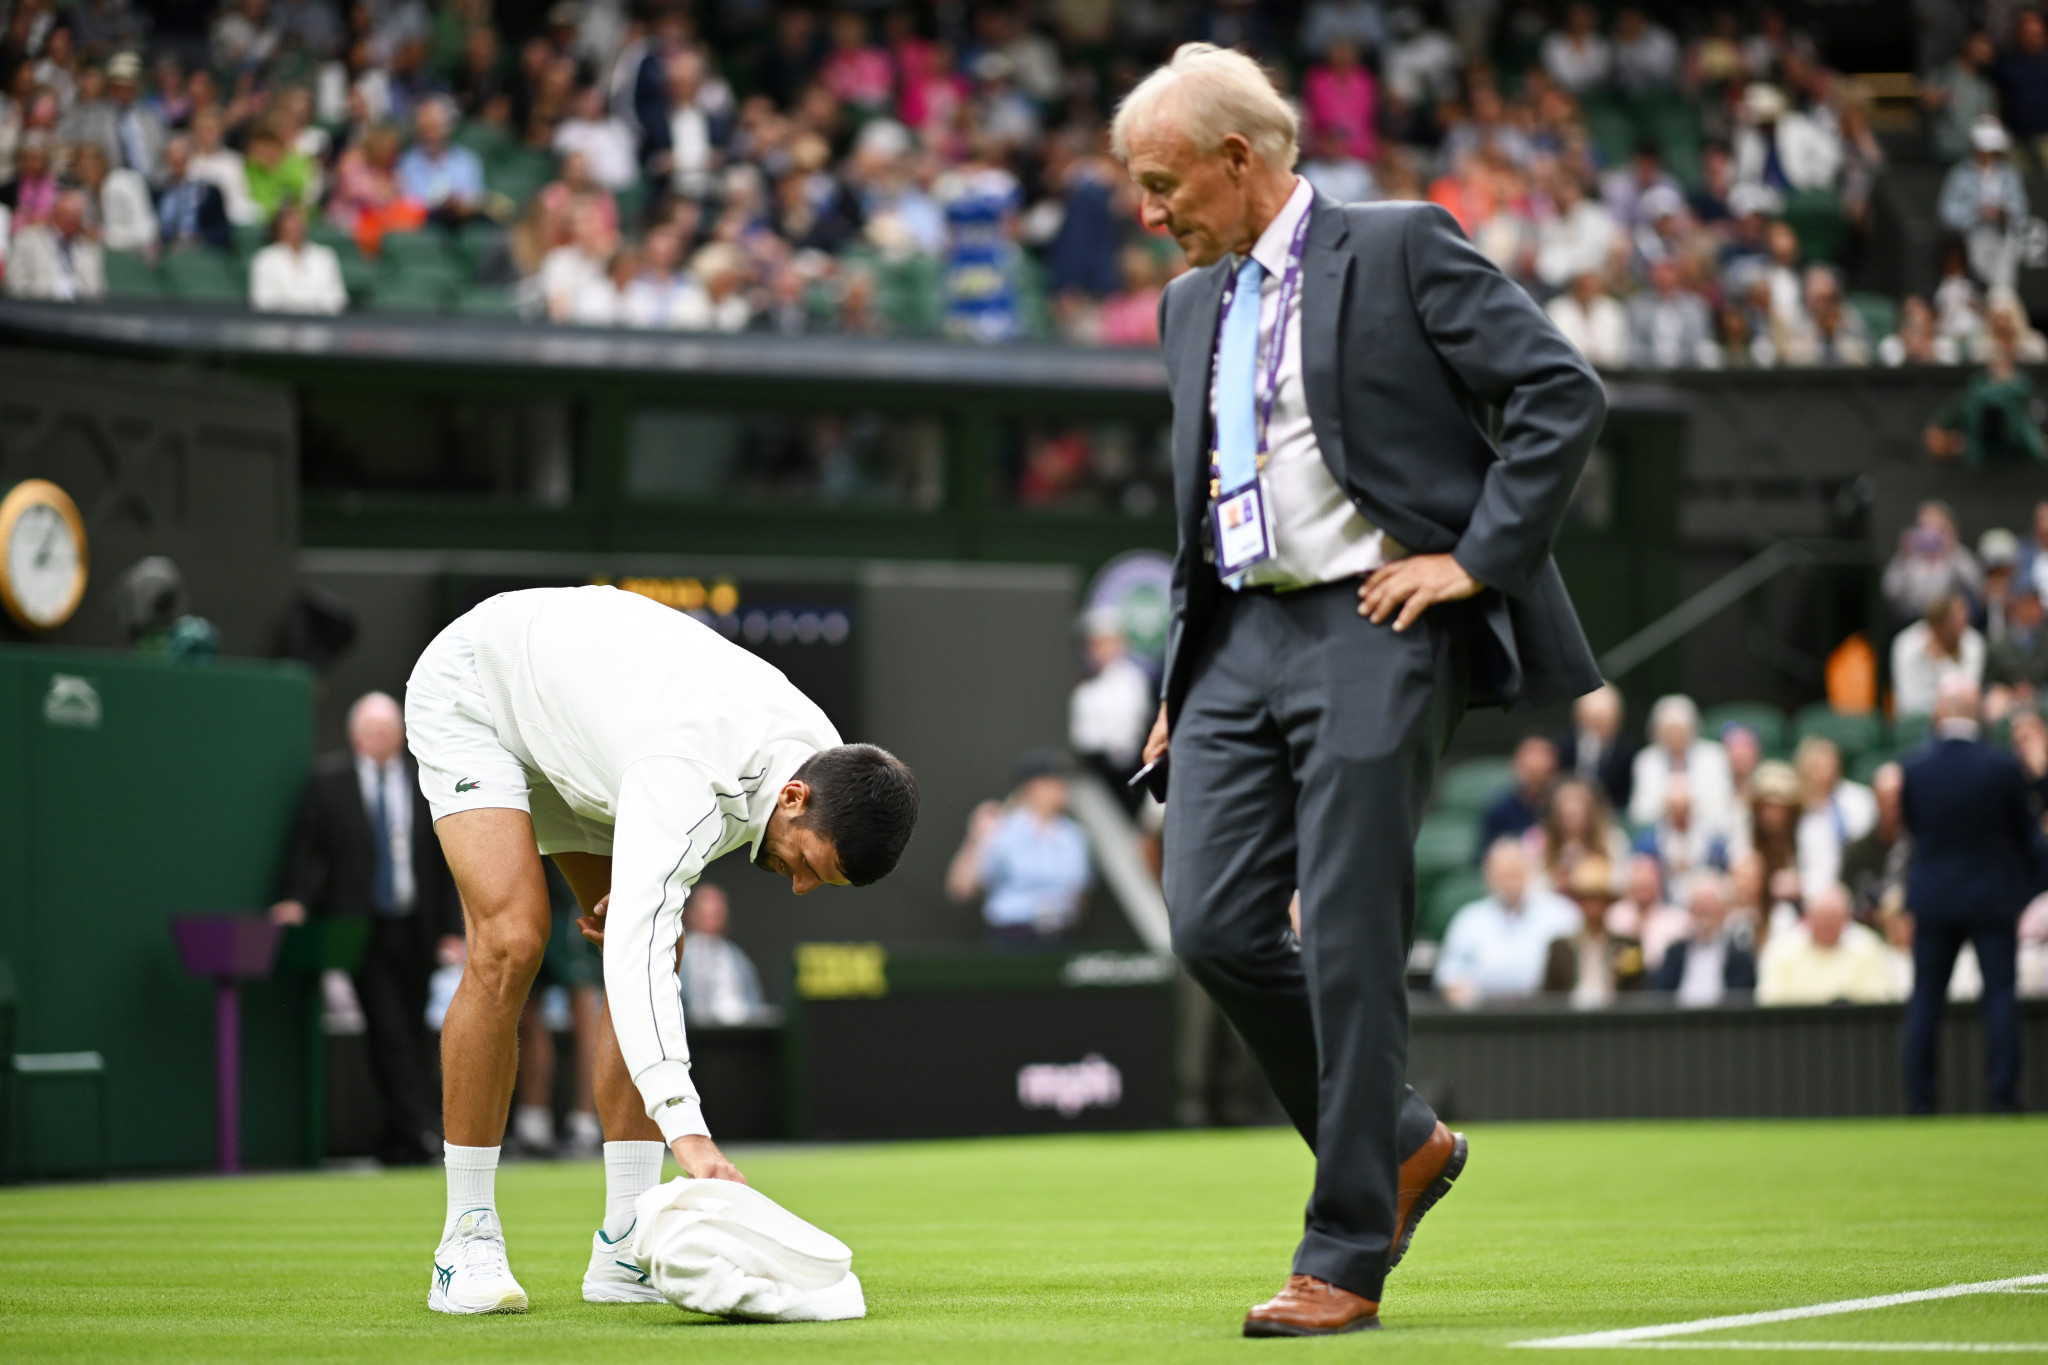 Djokovic and Świątek among day one Wimbledon winners as Venus Williams suffers defeat